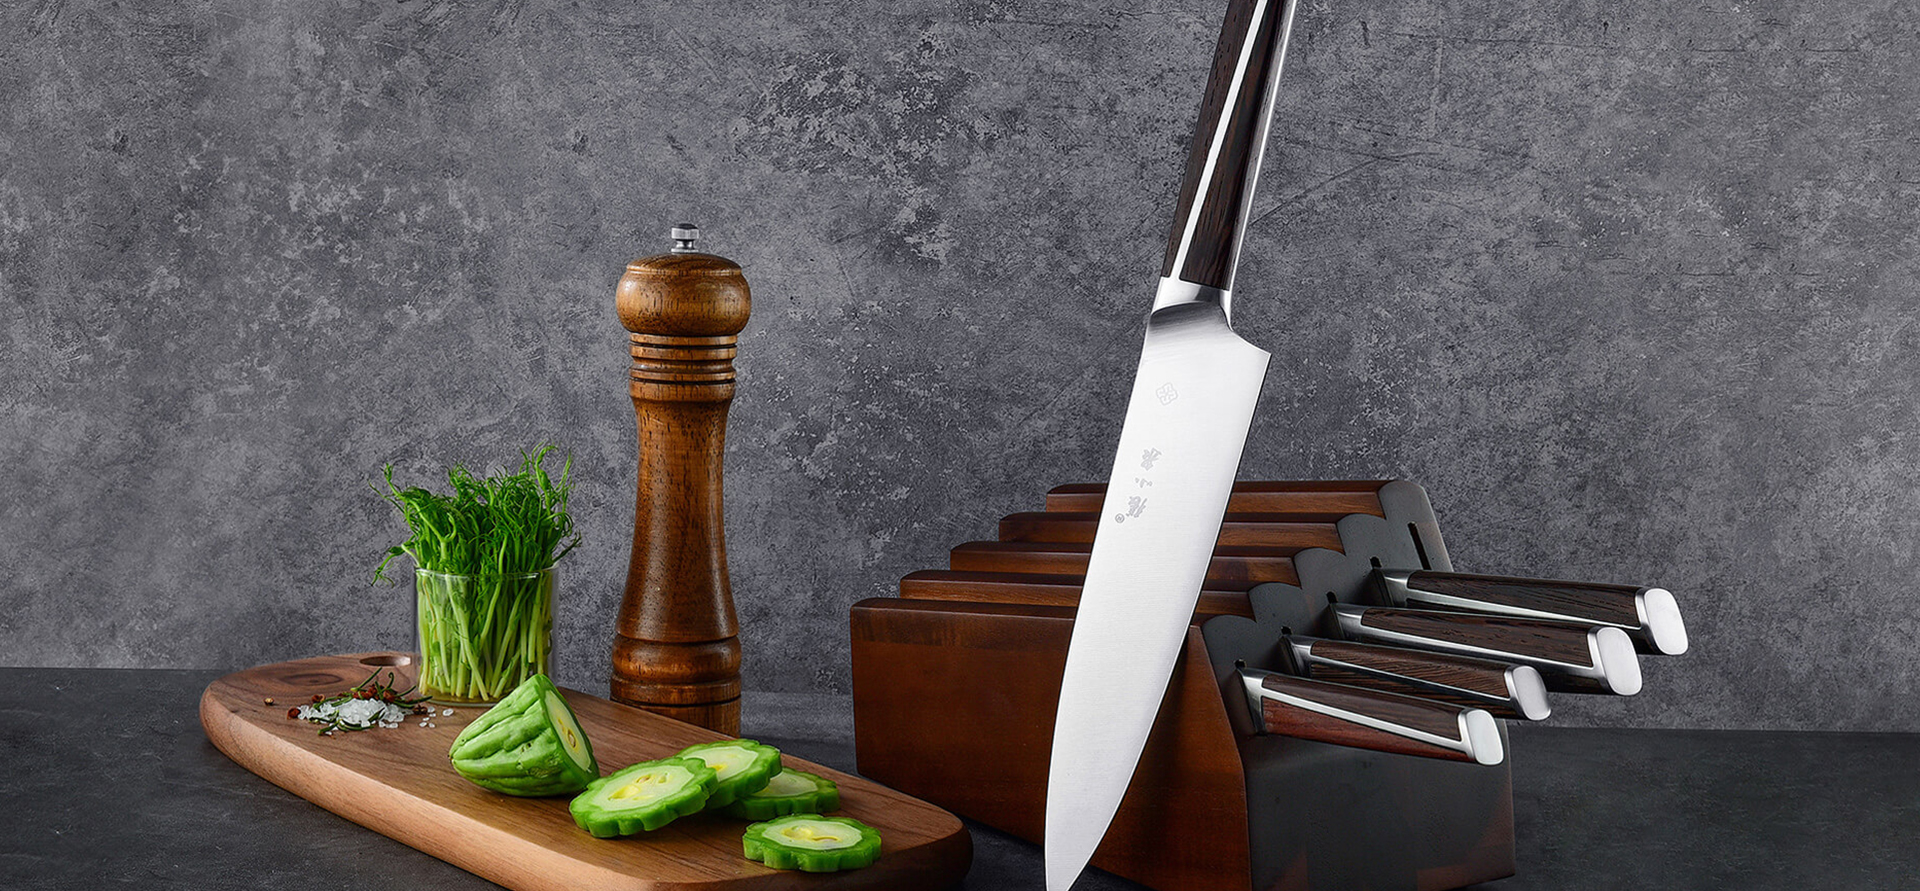 FINDKING Dynasty Series 4PCS Kitchen Knife Set  